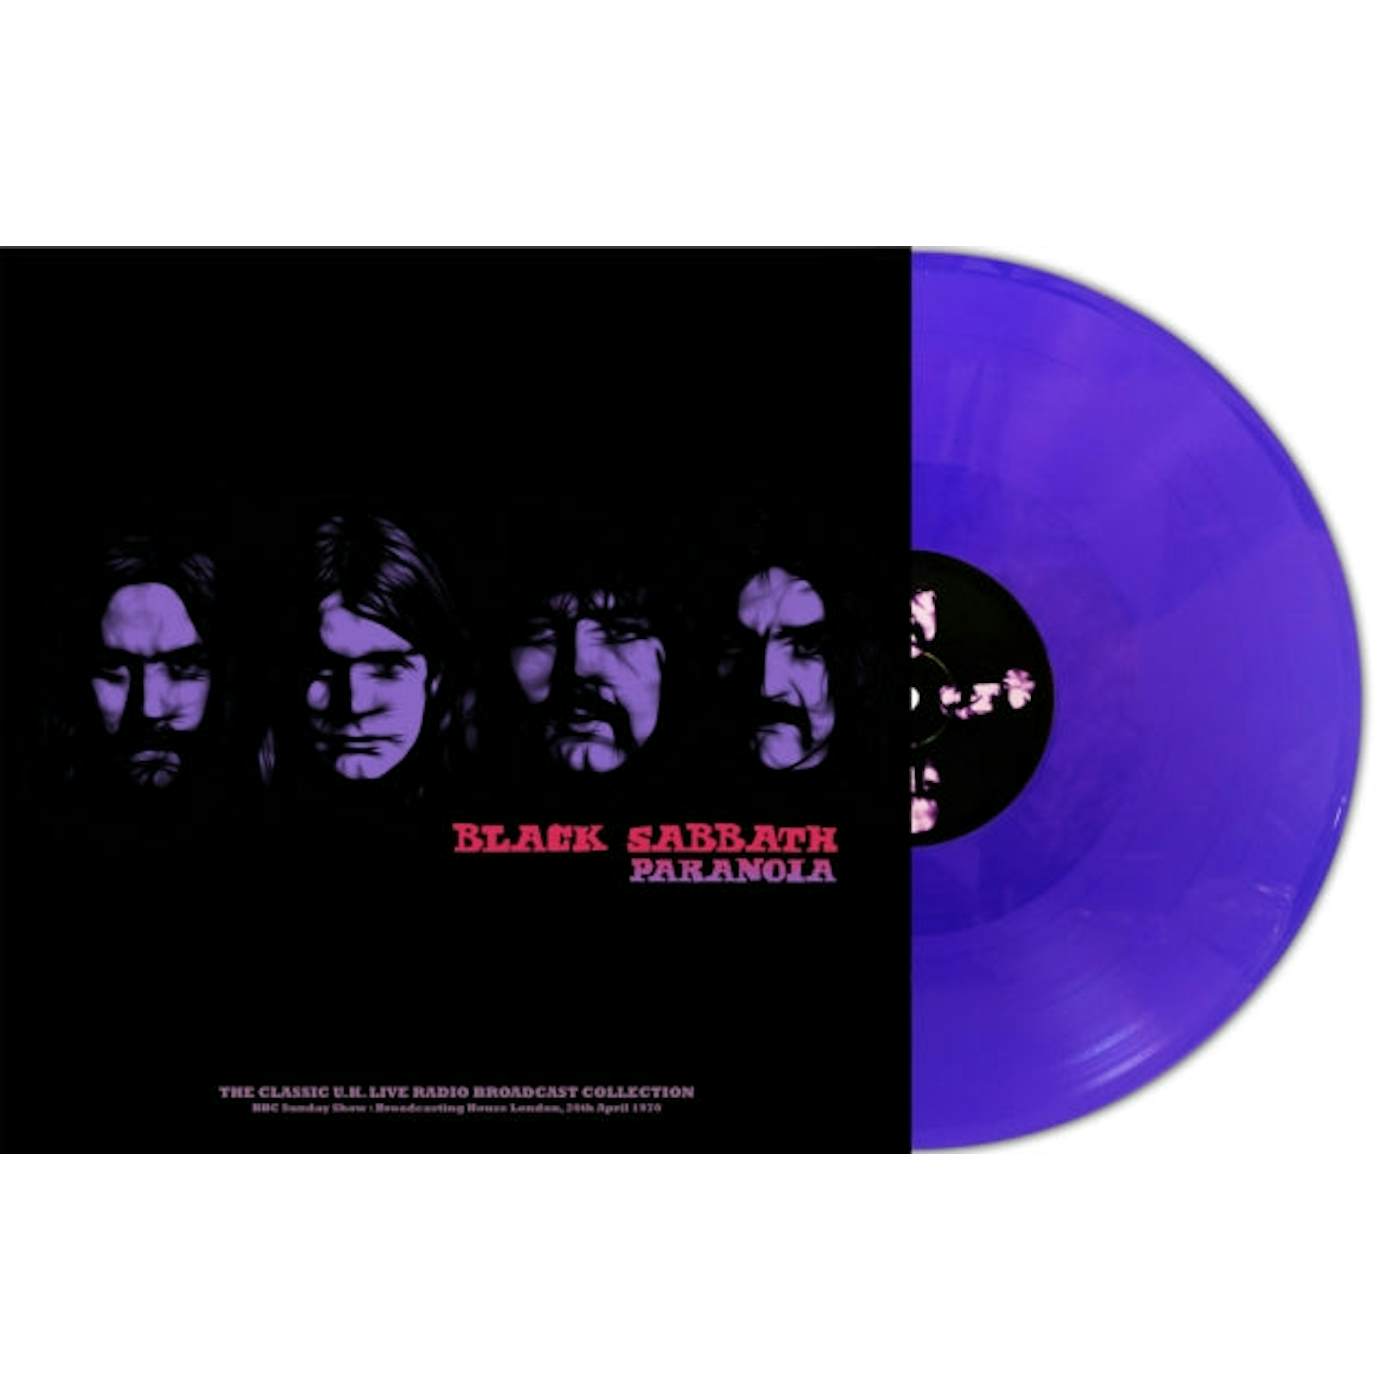 Black Sabbath LP Vinyl Record - BBC Sunday Show Broadcasting House London 26th April 19 70 (Purple Vinyl)